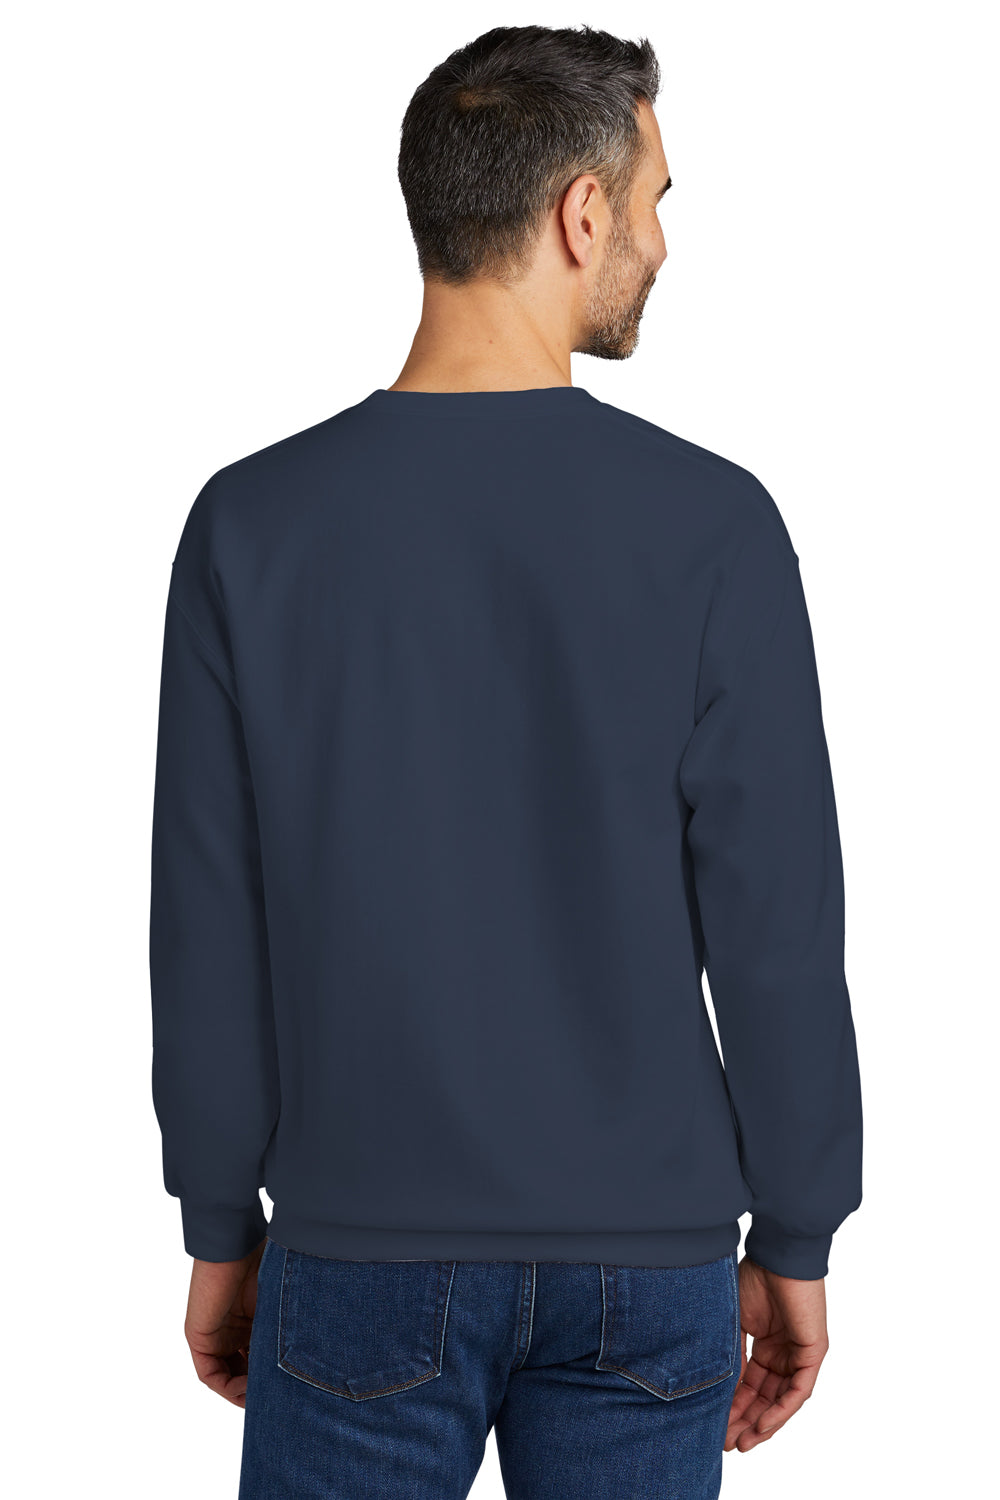 Gildan SF000 Softstyle Crewneck Sweatshirt Navy Blue Back